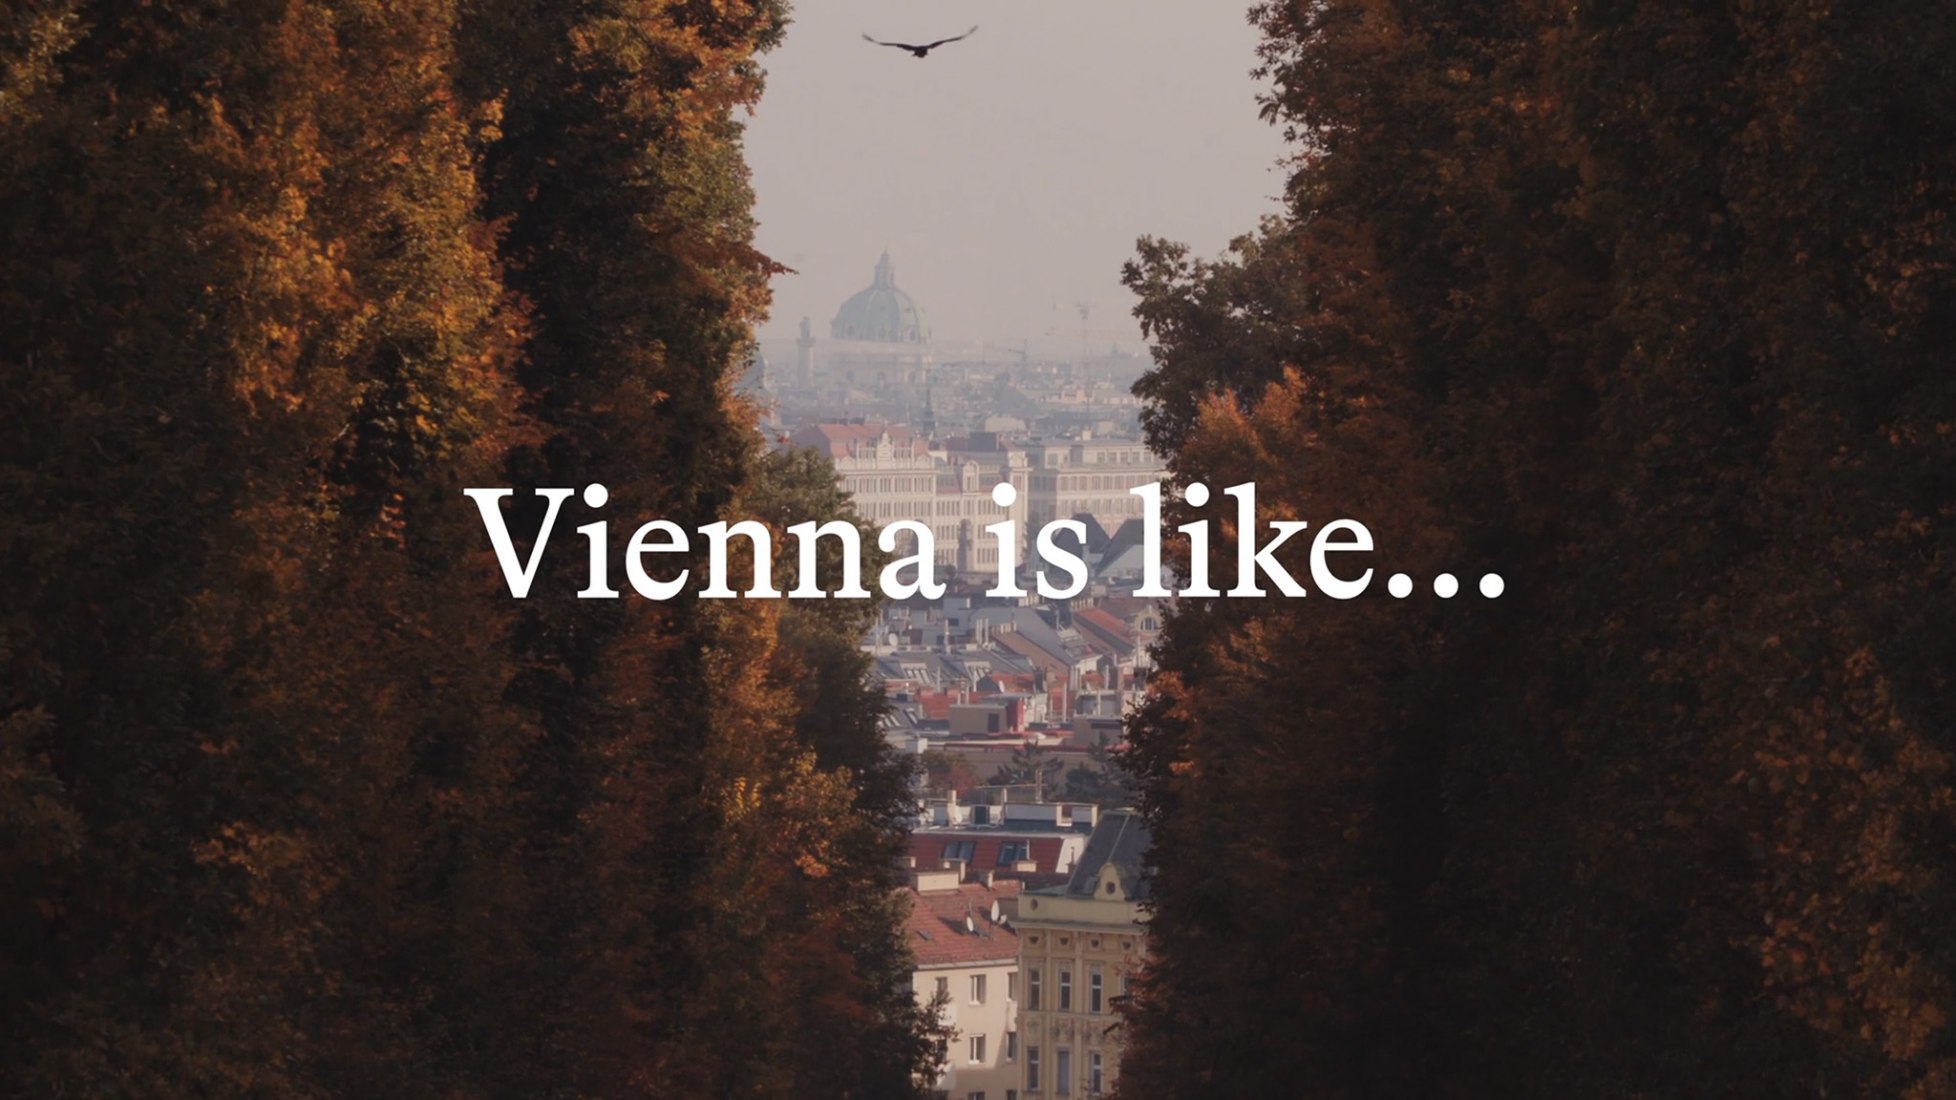 Vienna is like… by Fernando Livschitz